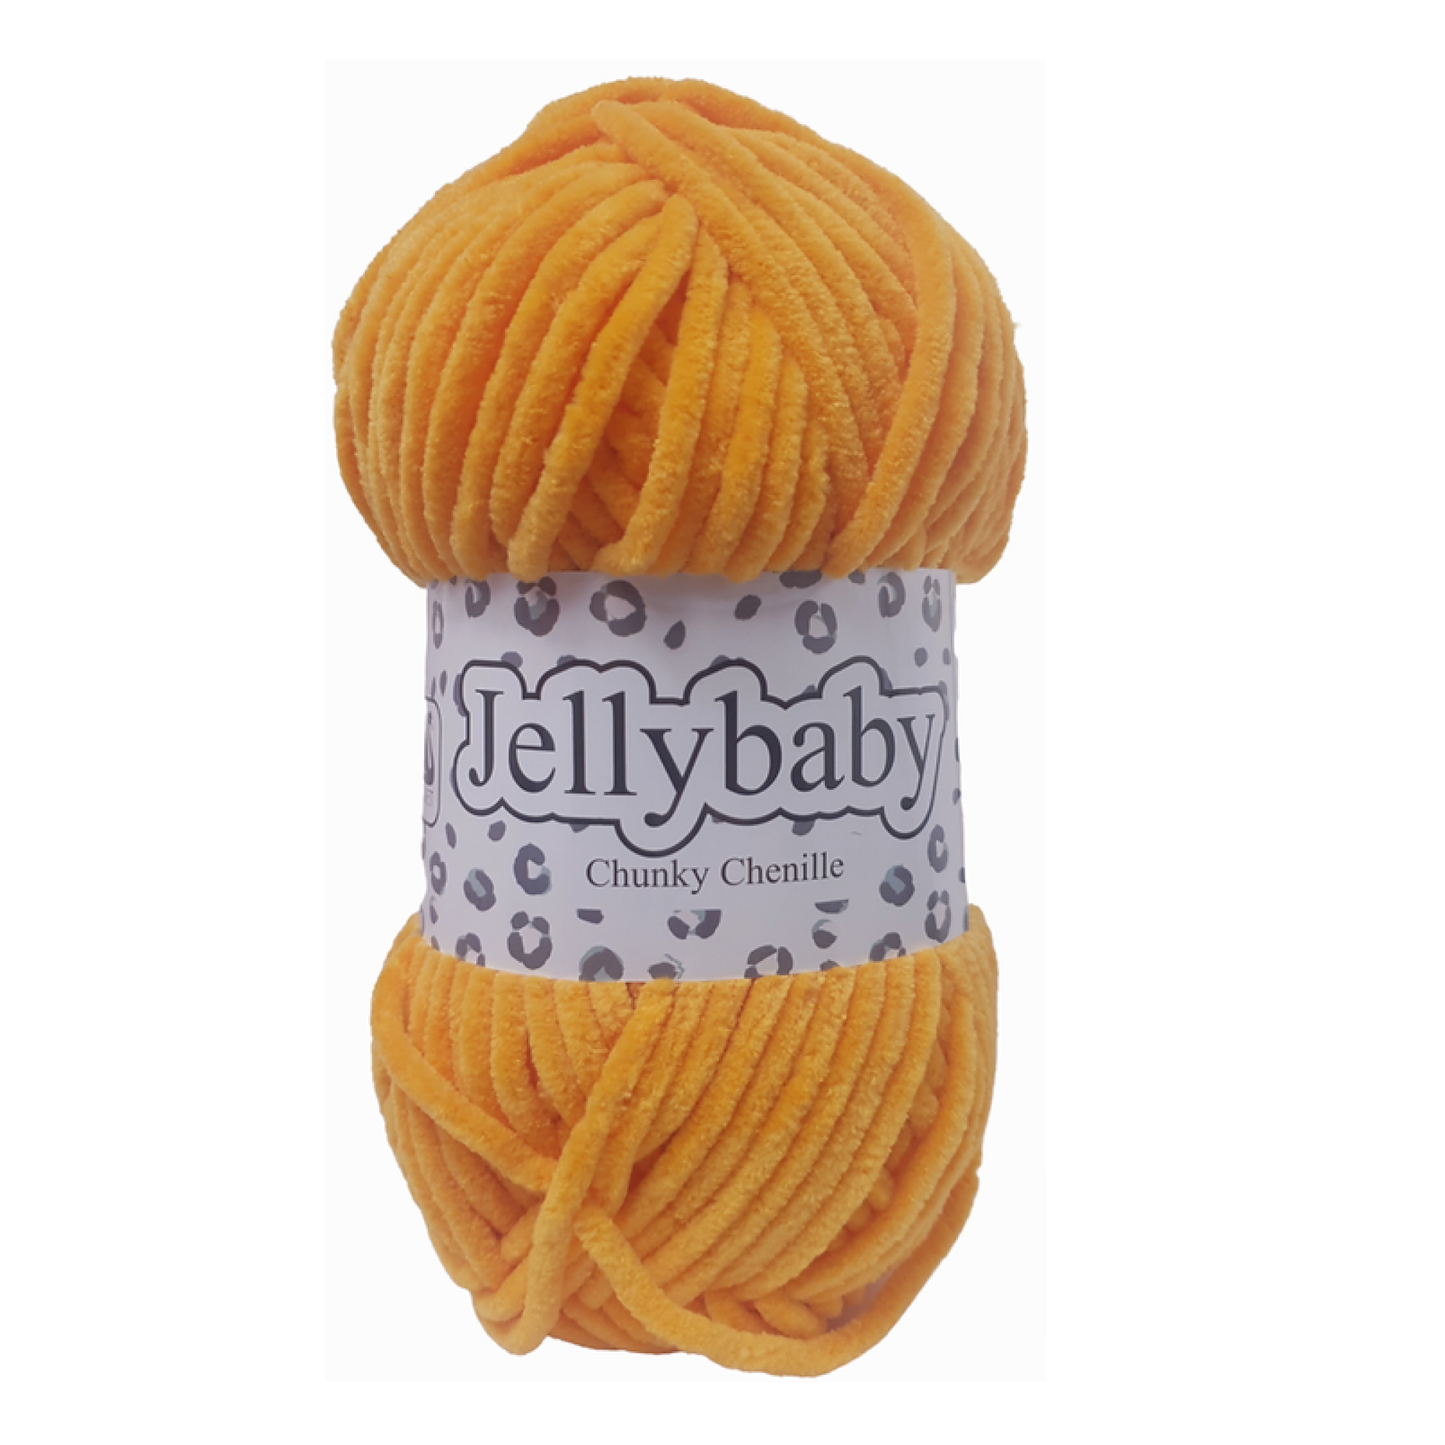 Cygnet Yarns - Jellybaby Chenille - Chunky - 100g Ball - 010 Butterscotch